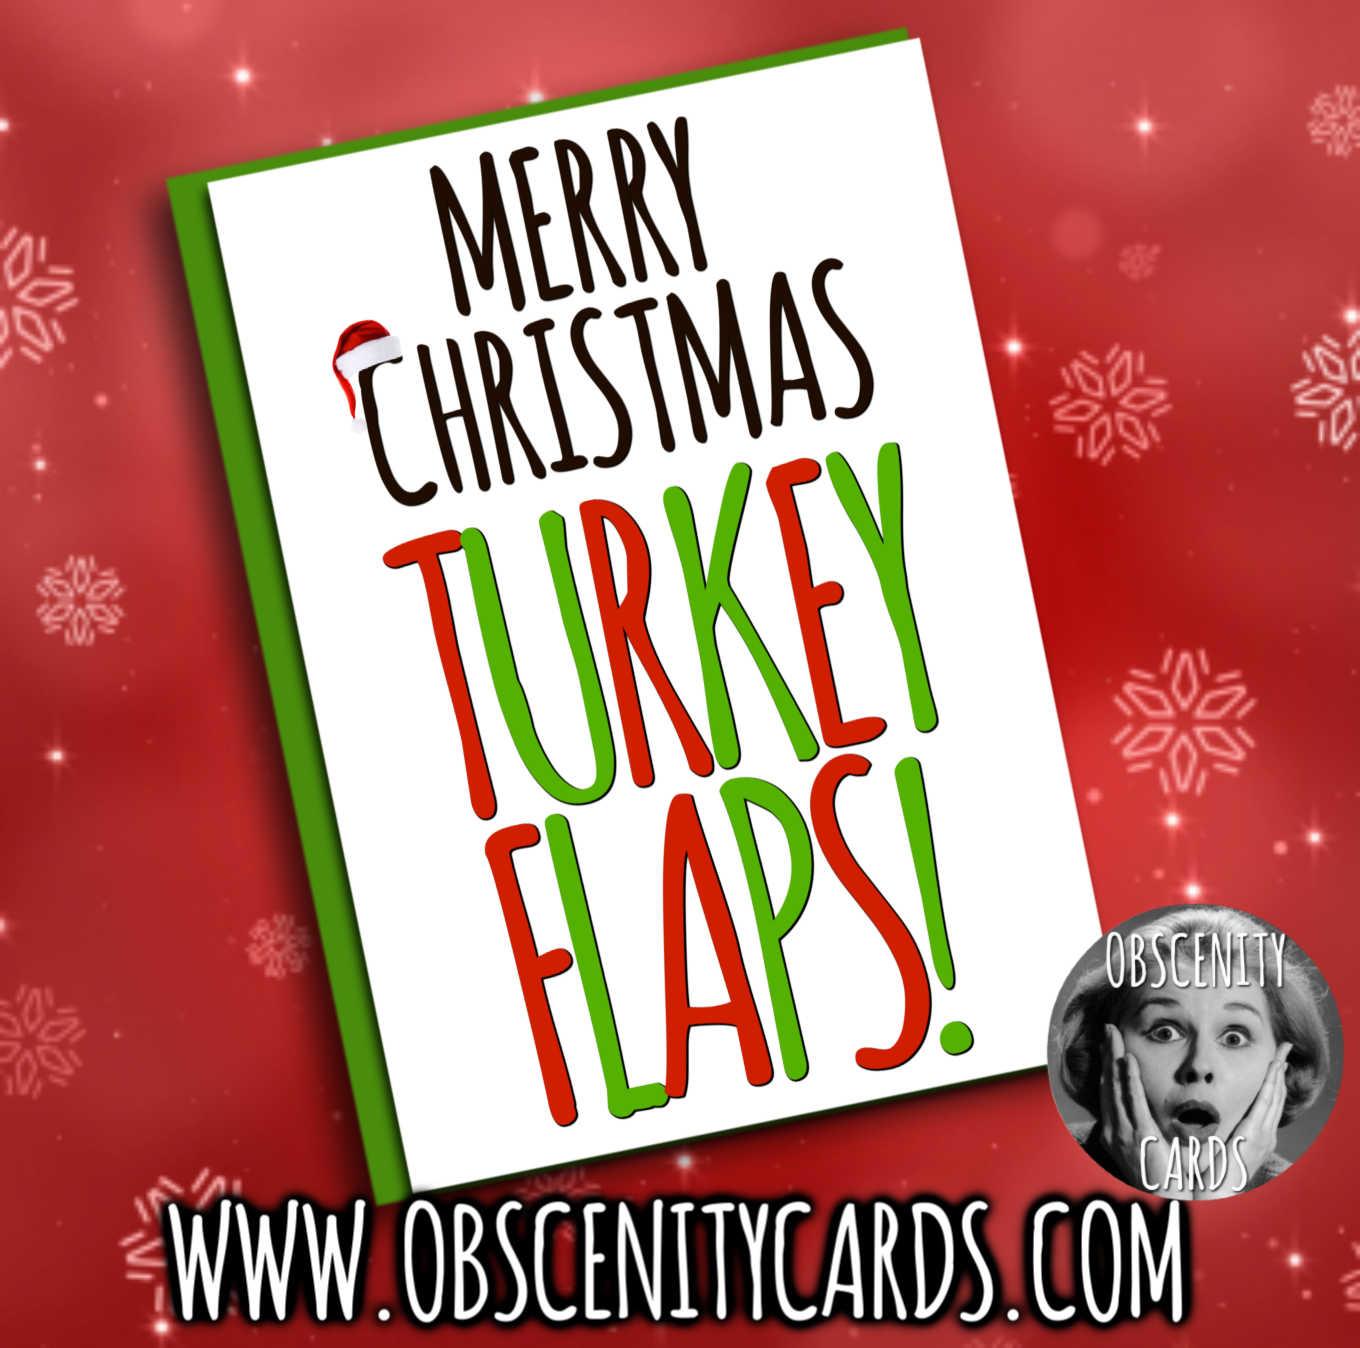 MERRY CHRISTMAS TURKEY FLAPS CARD